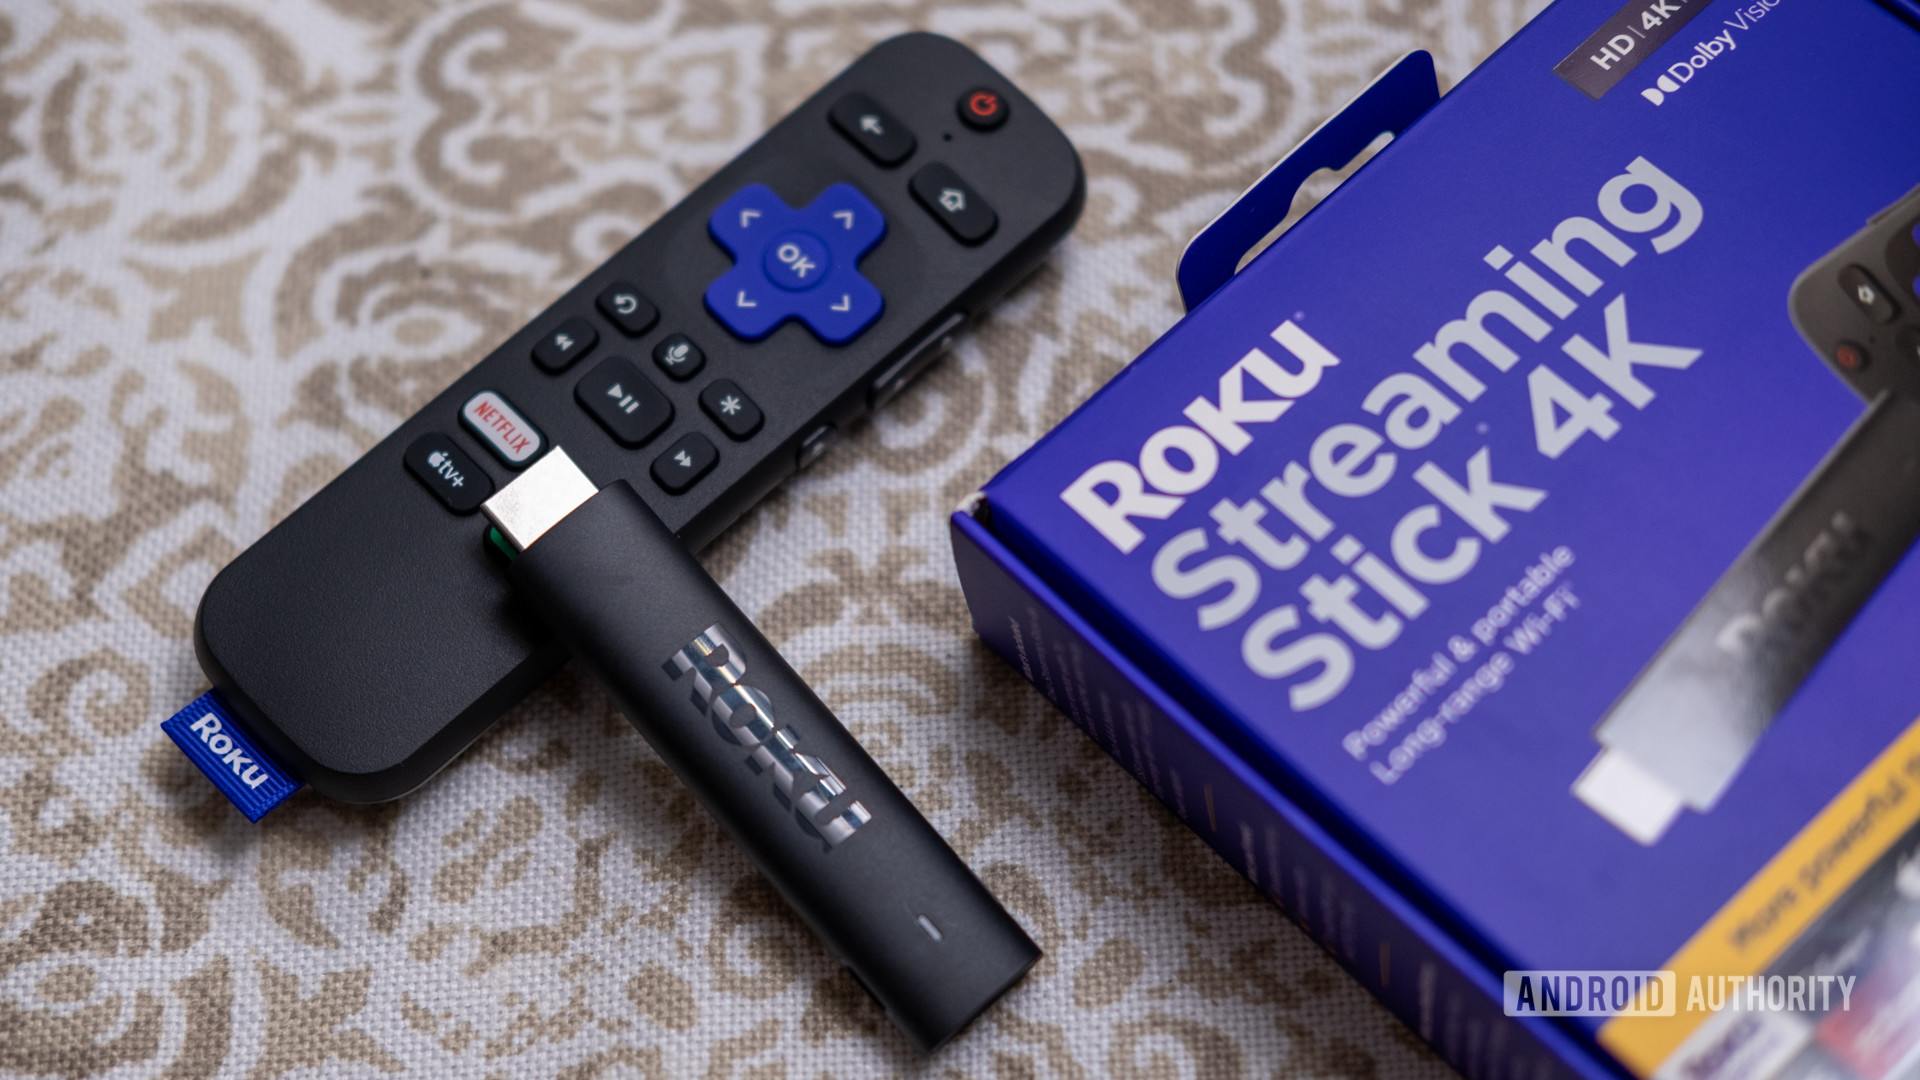 A Roku Streaming Stick 4K lying next to its box.